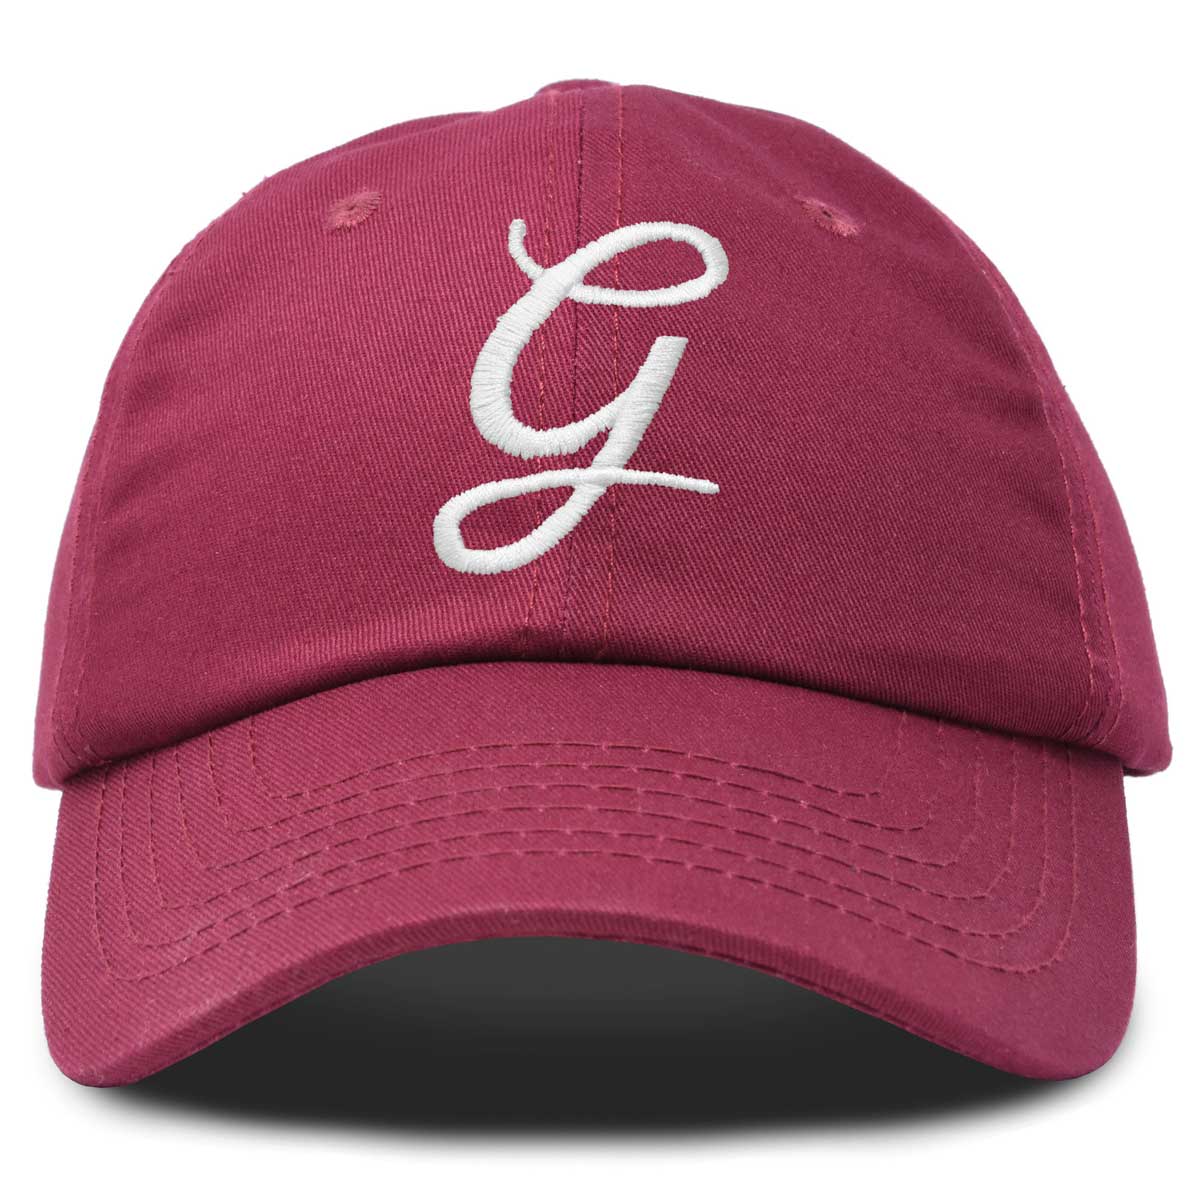 Dalix Initial Letter G Hat